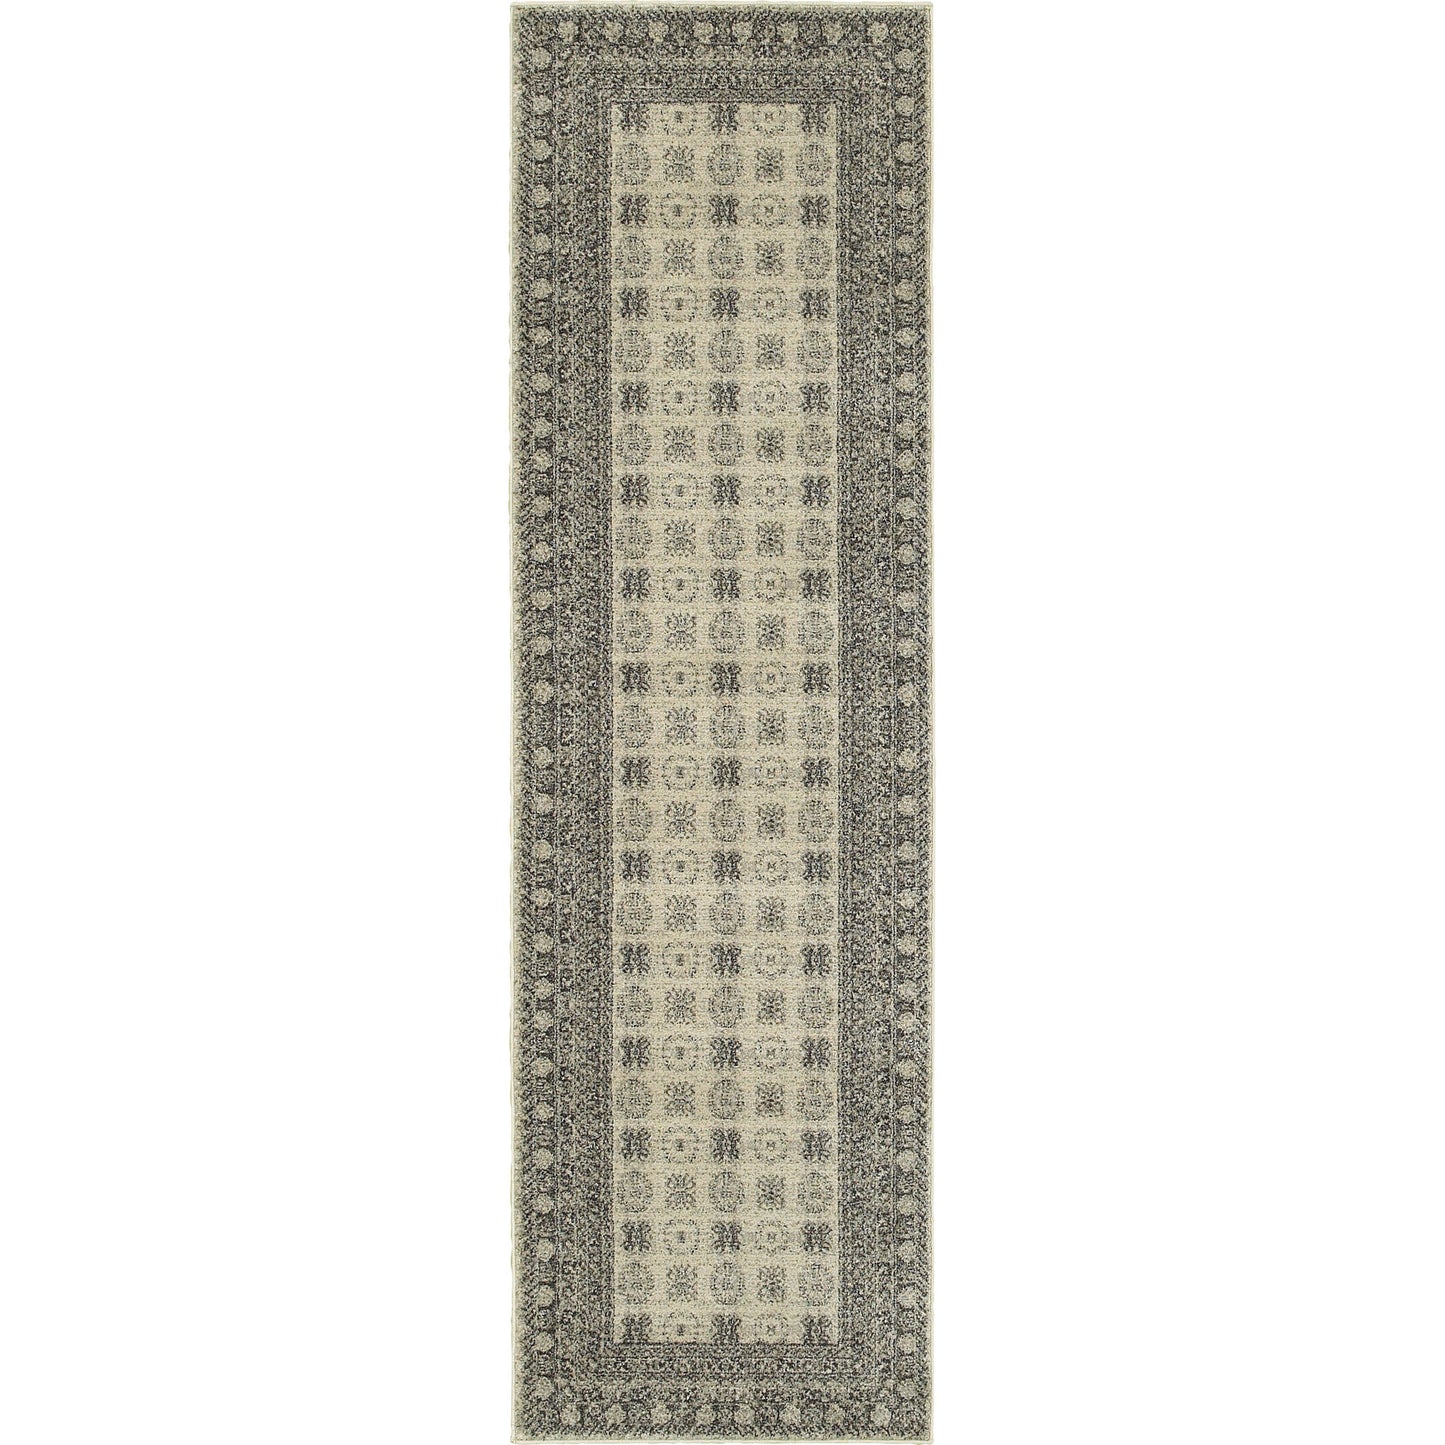 RICHMOND 4440S Ivory, Grey Rug - Oriental Weavers